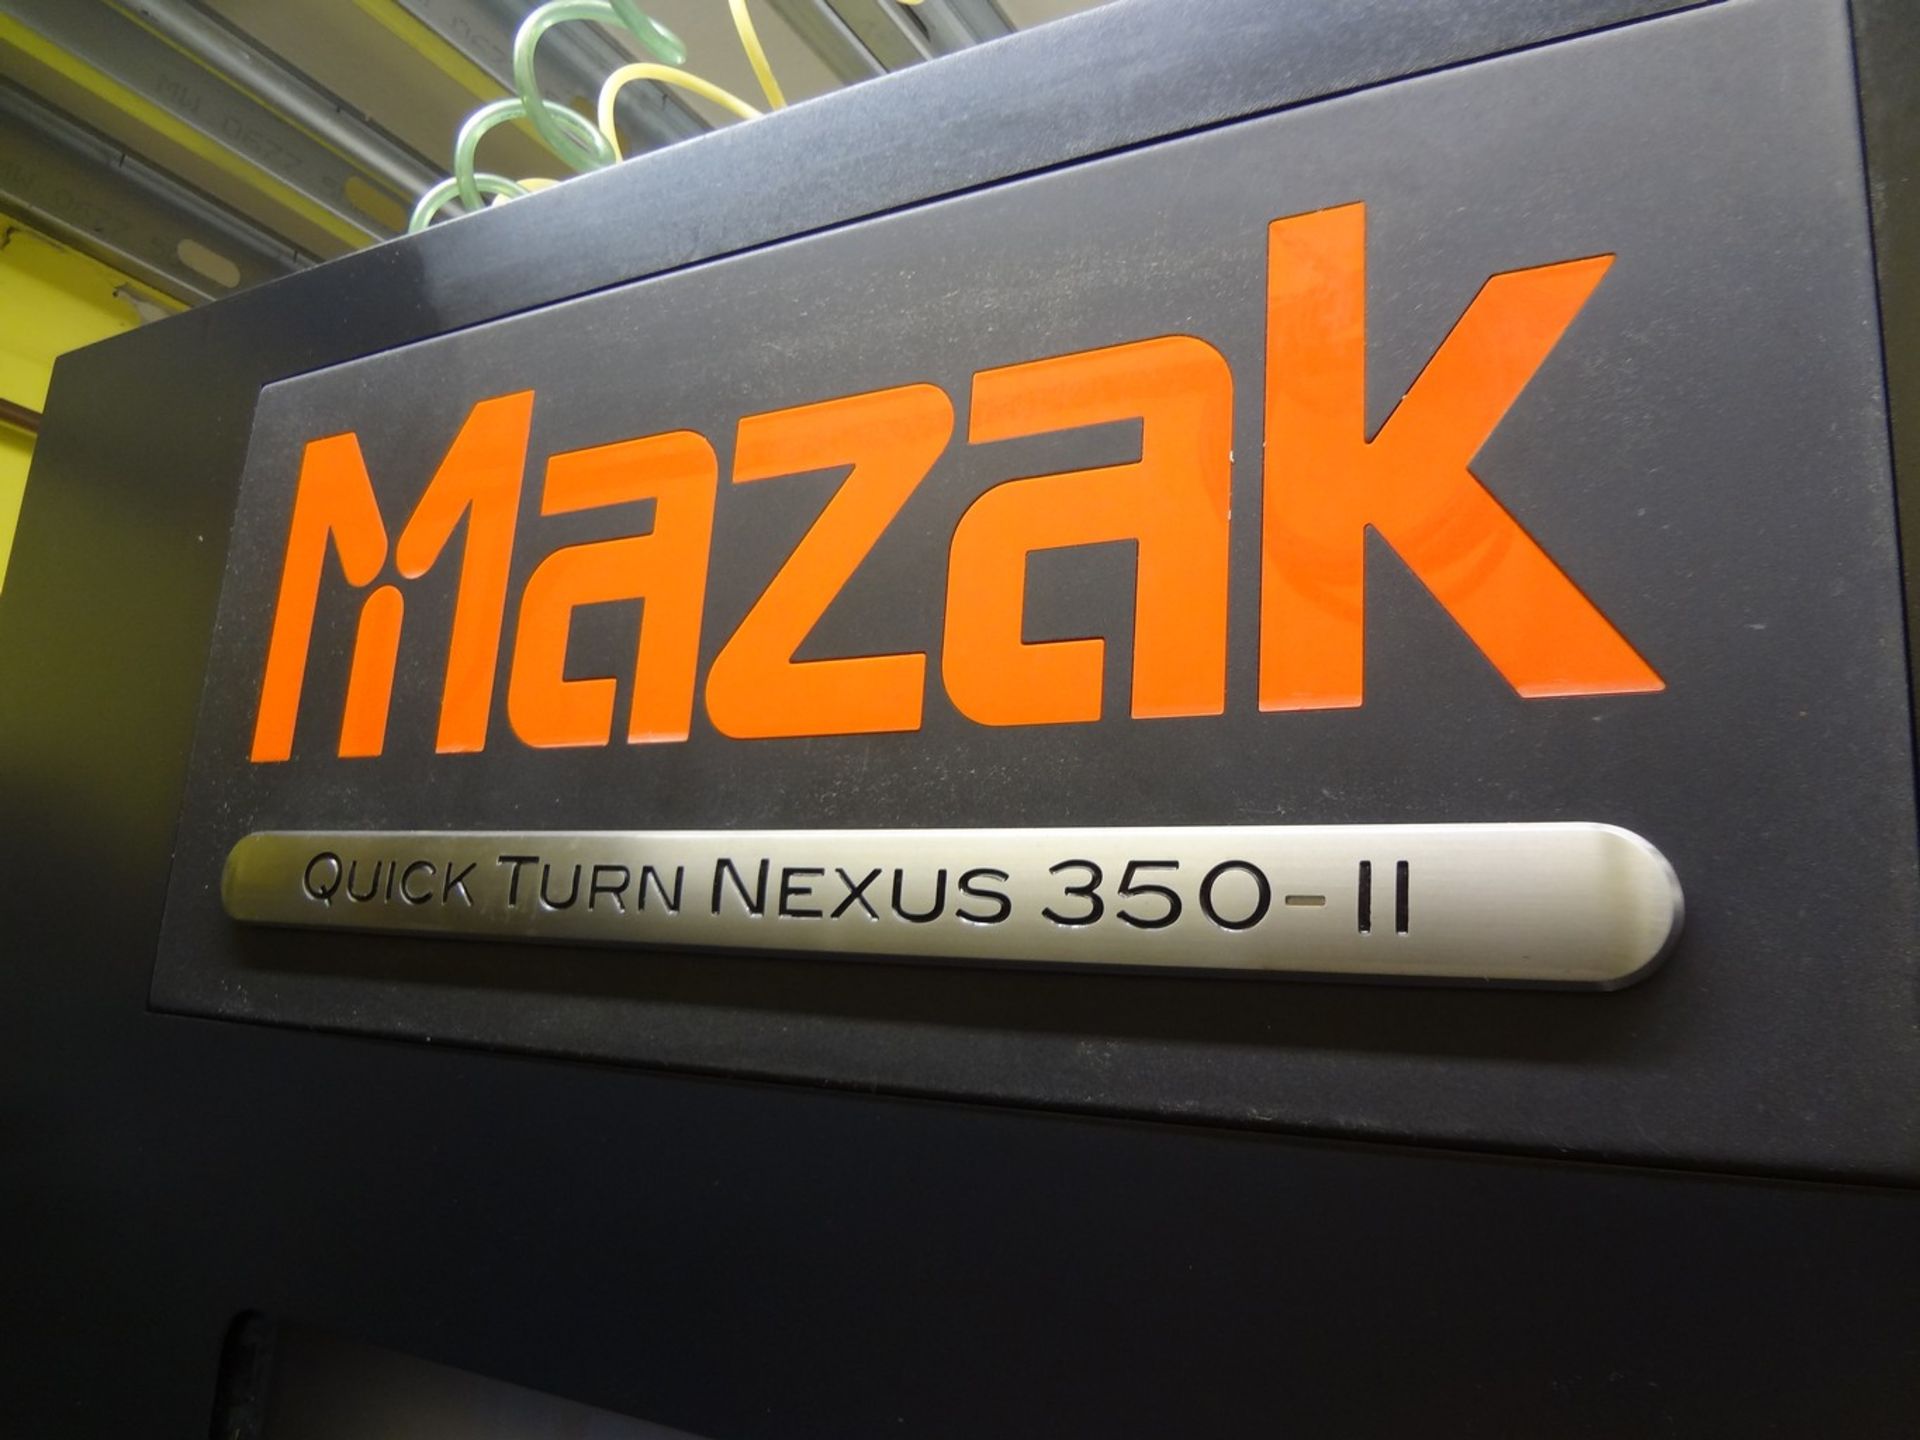 Mazak Quick Turn Nexus 350-II CNC Lathe, Matrix Nexus CNC Control, S/N 246648 [2013] - Image 21 of 24